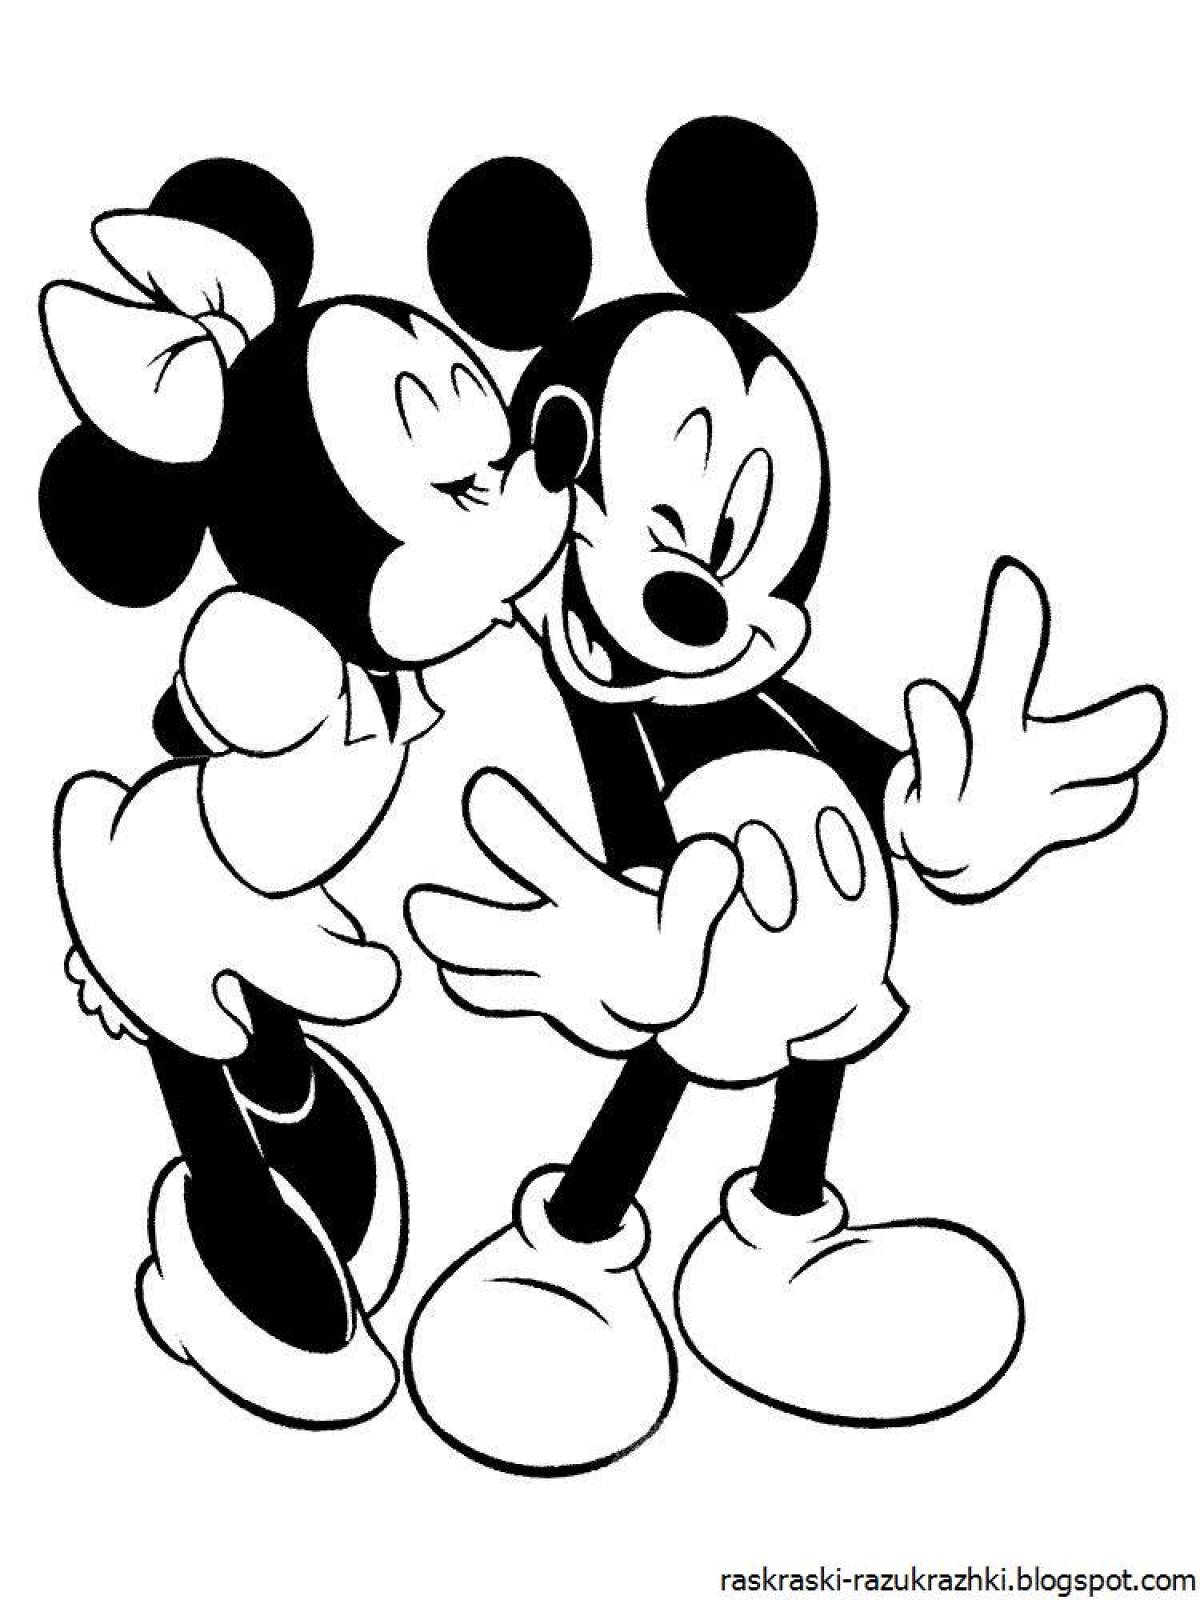 Mickey mouse fun coloring book